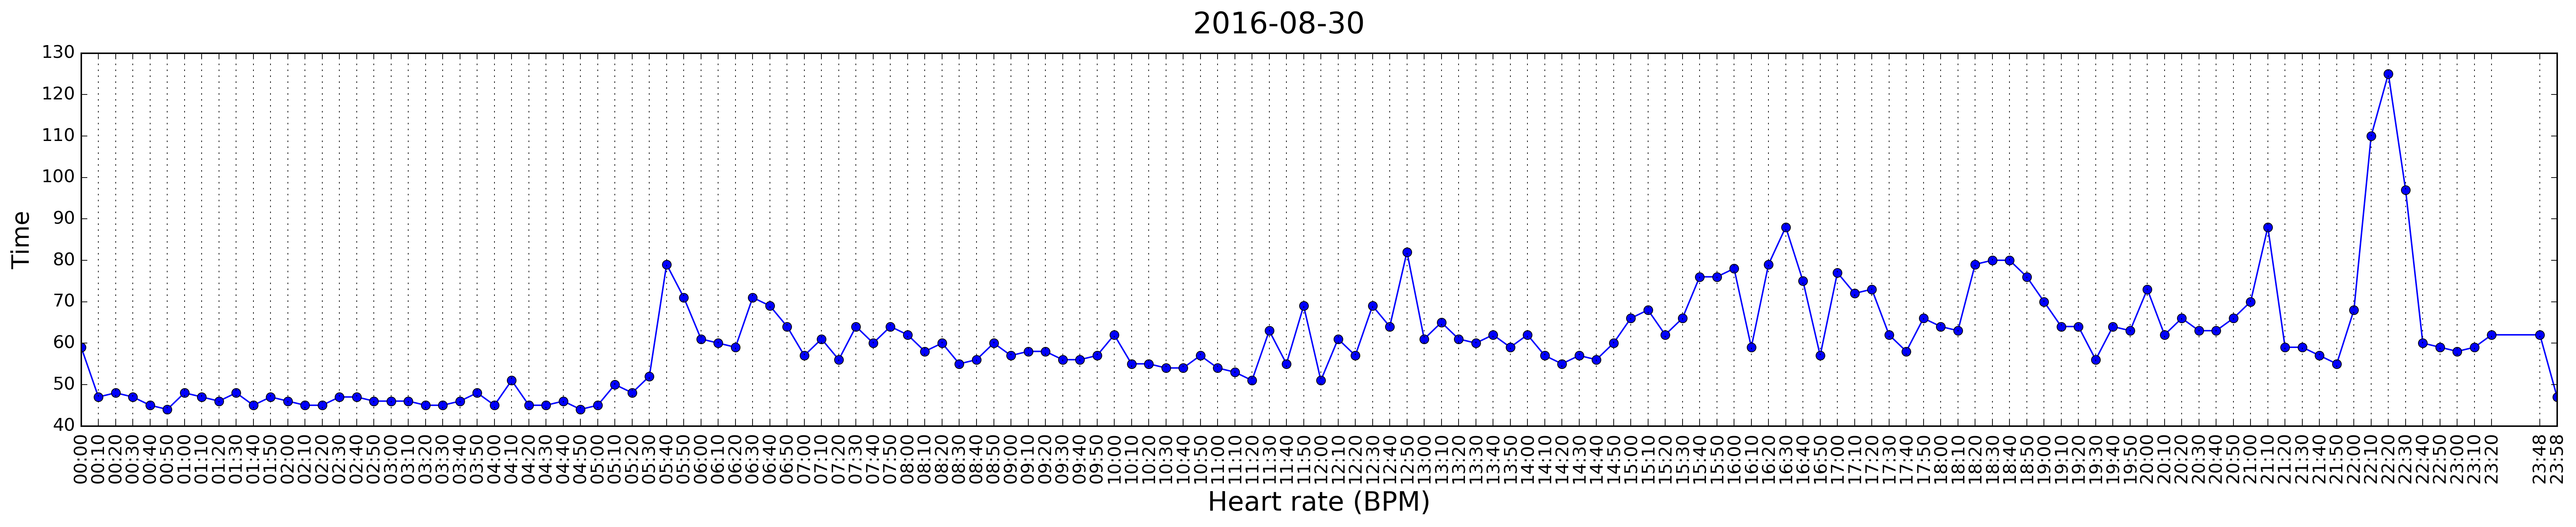 2016-08-30-heart